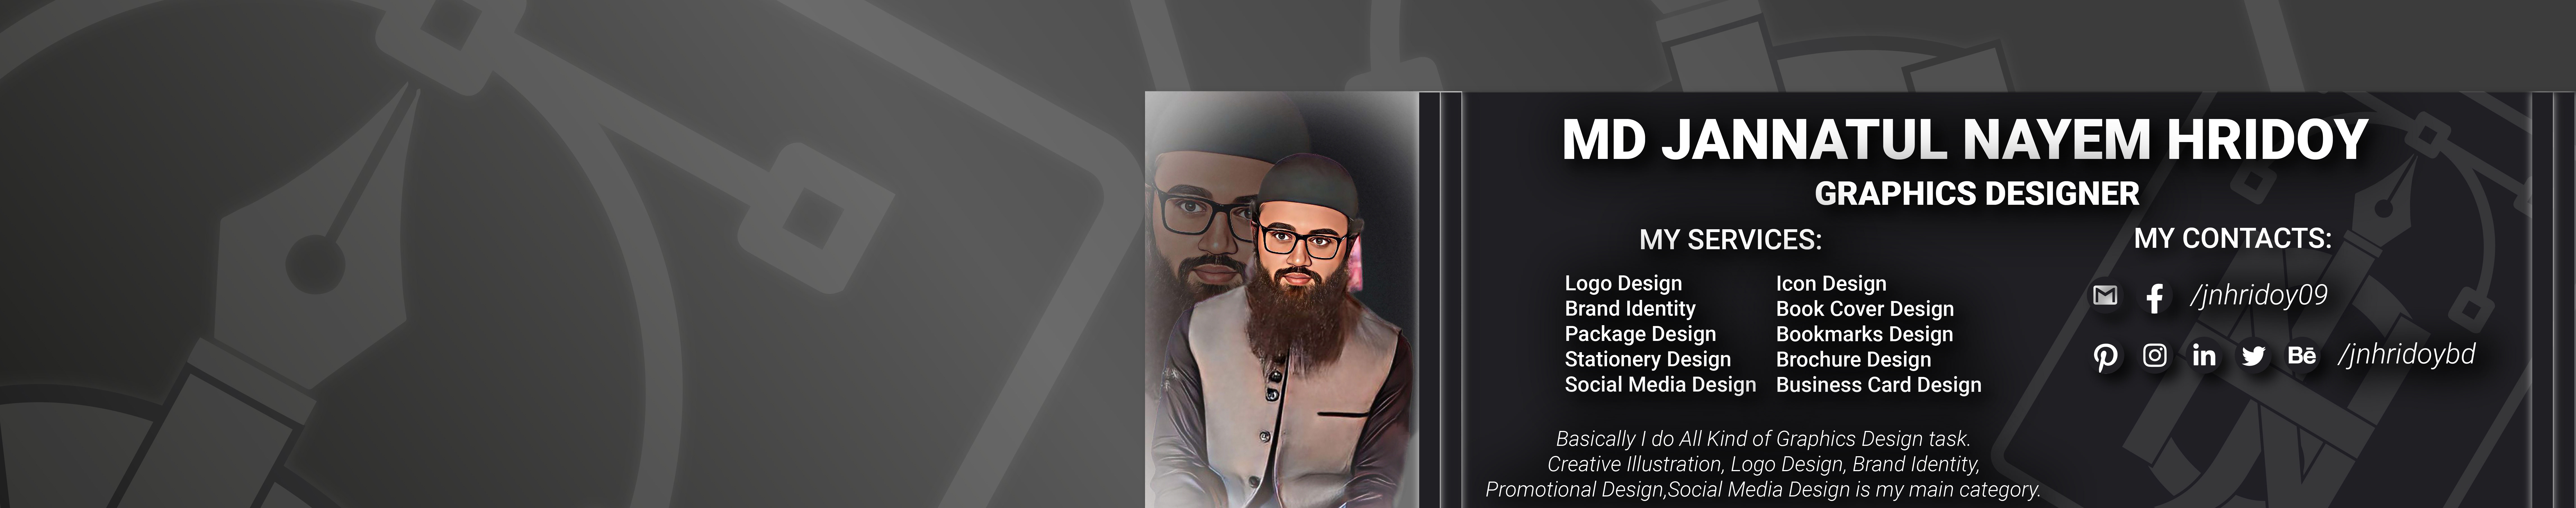 MD Jannatul Nayem Hridoy's profile banner